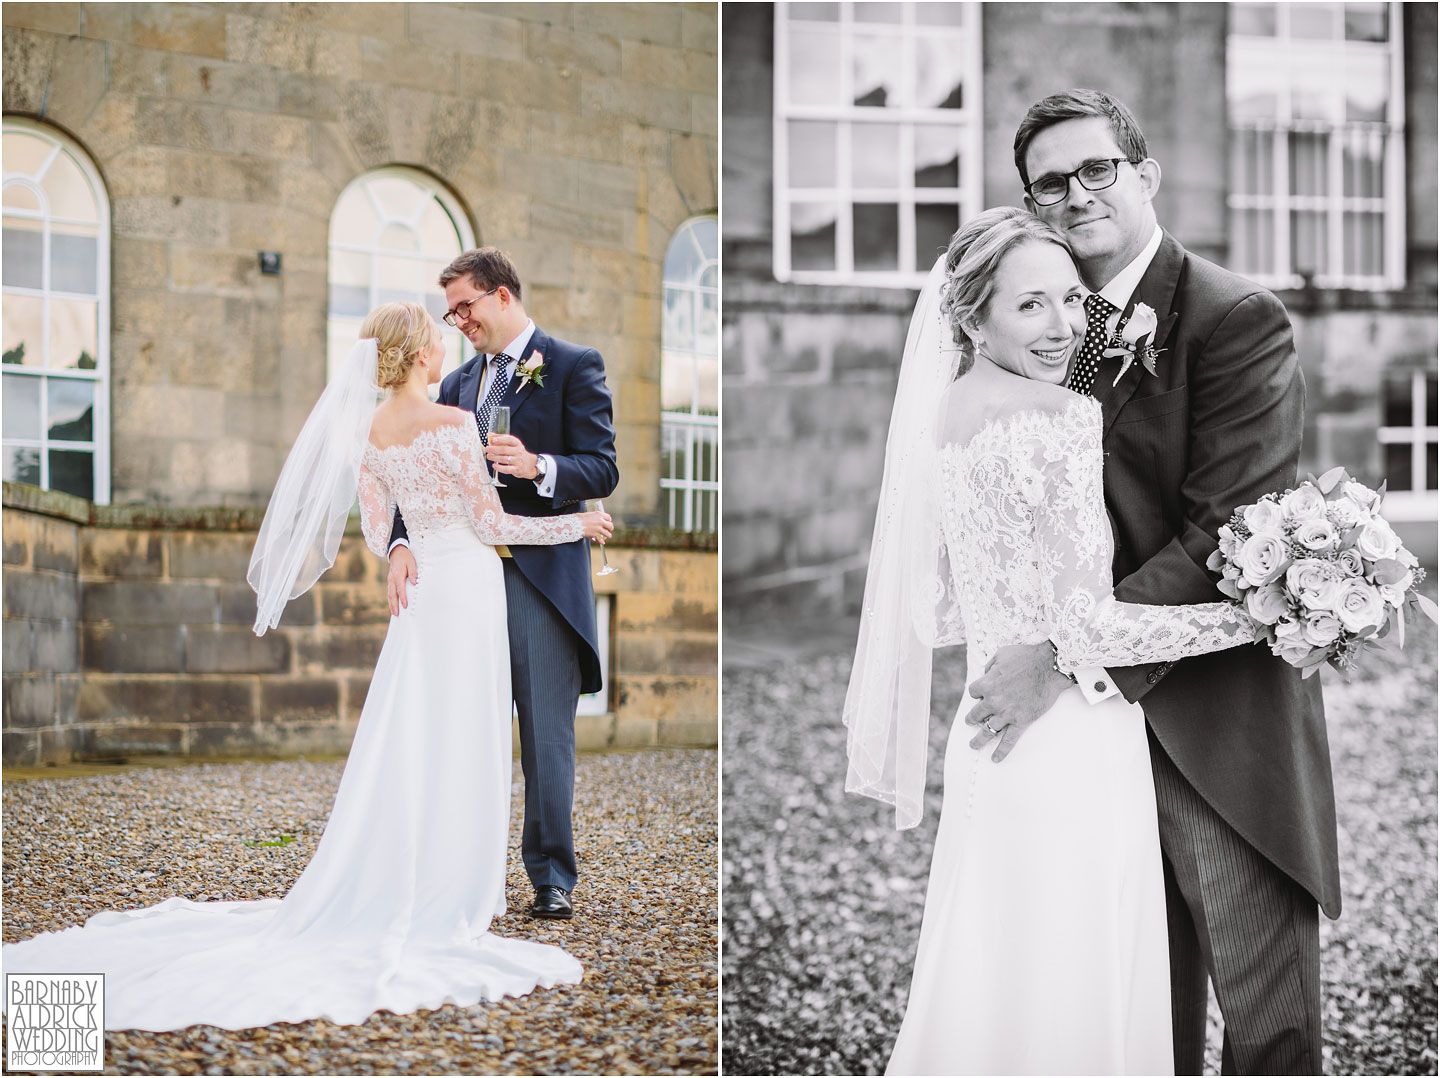 Denton Hall Wedding Photography, Ilkley Yorkshire Wedding Photographer, Yorkshire Country House Wedding, Box Tree Catering, Bridal PA